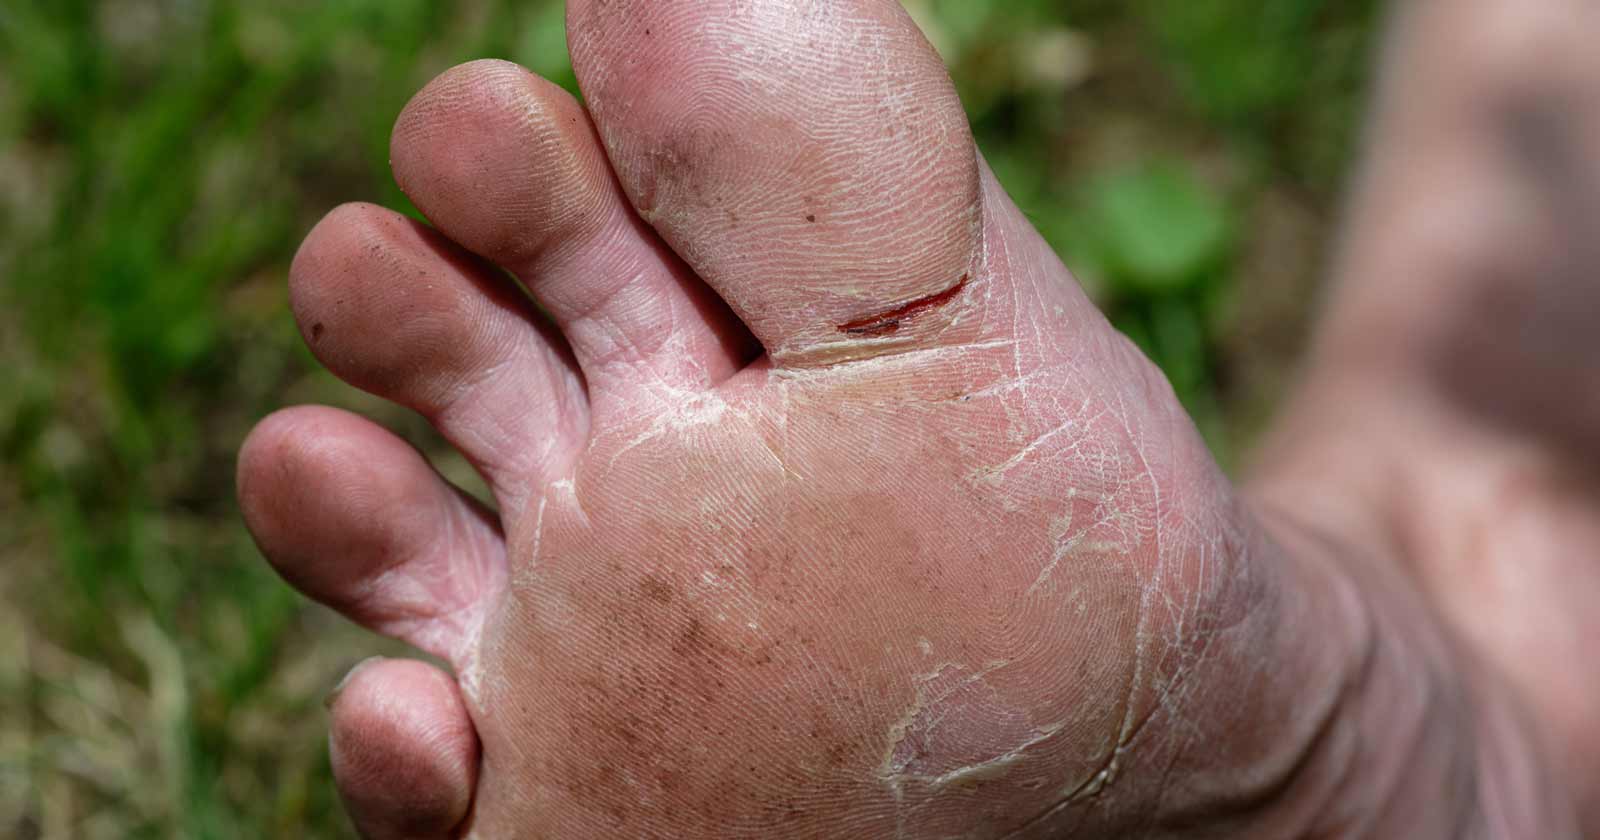 The challenge of wet feet